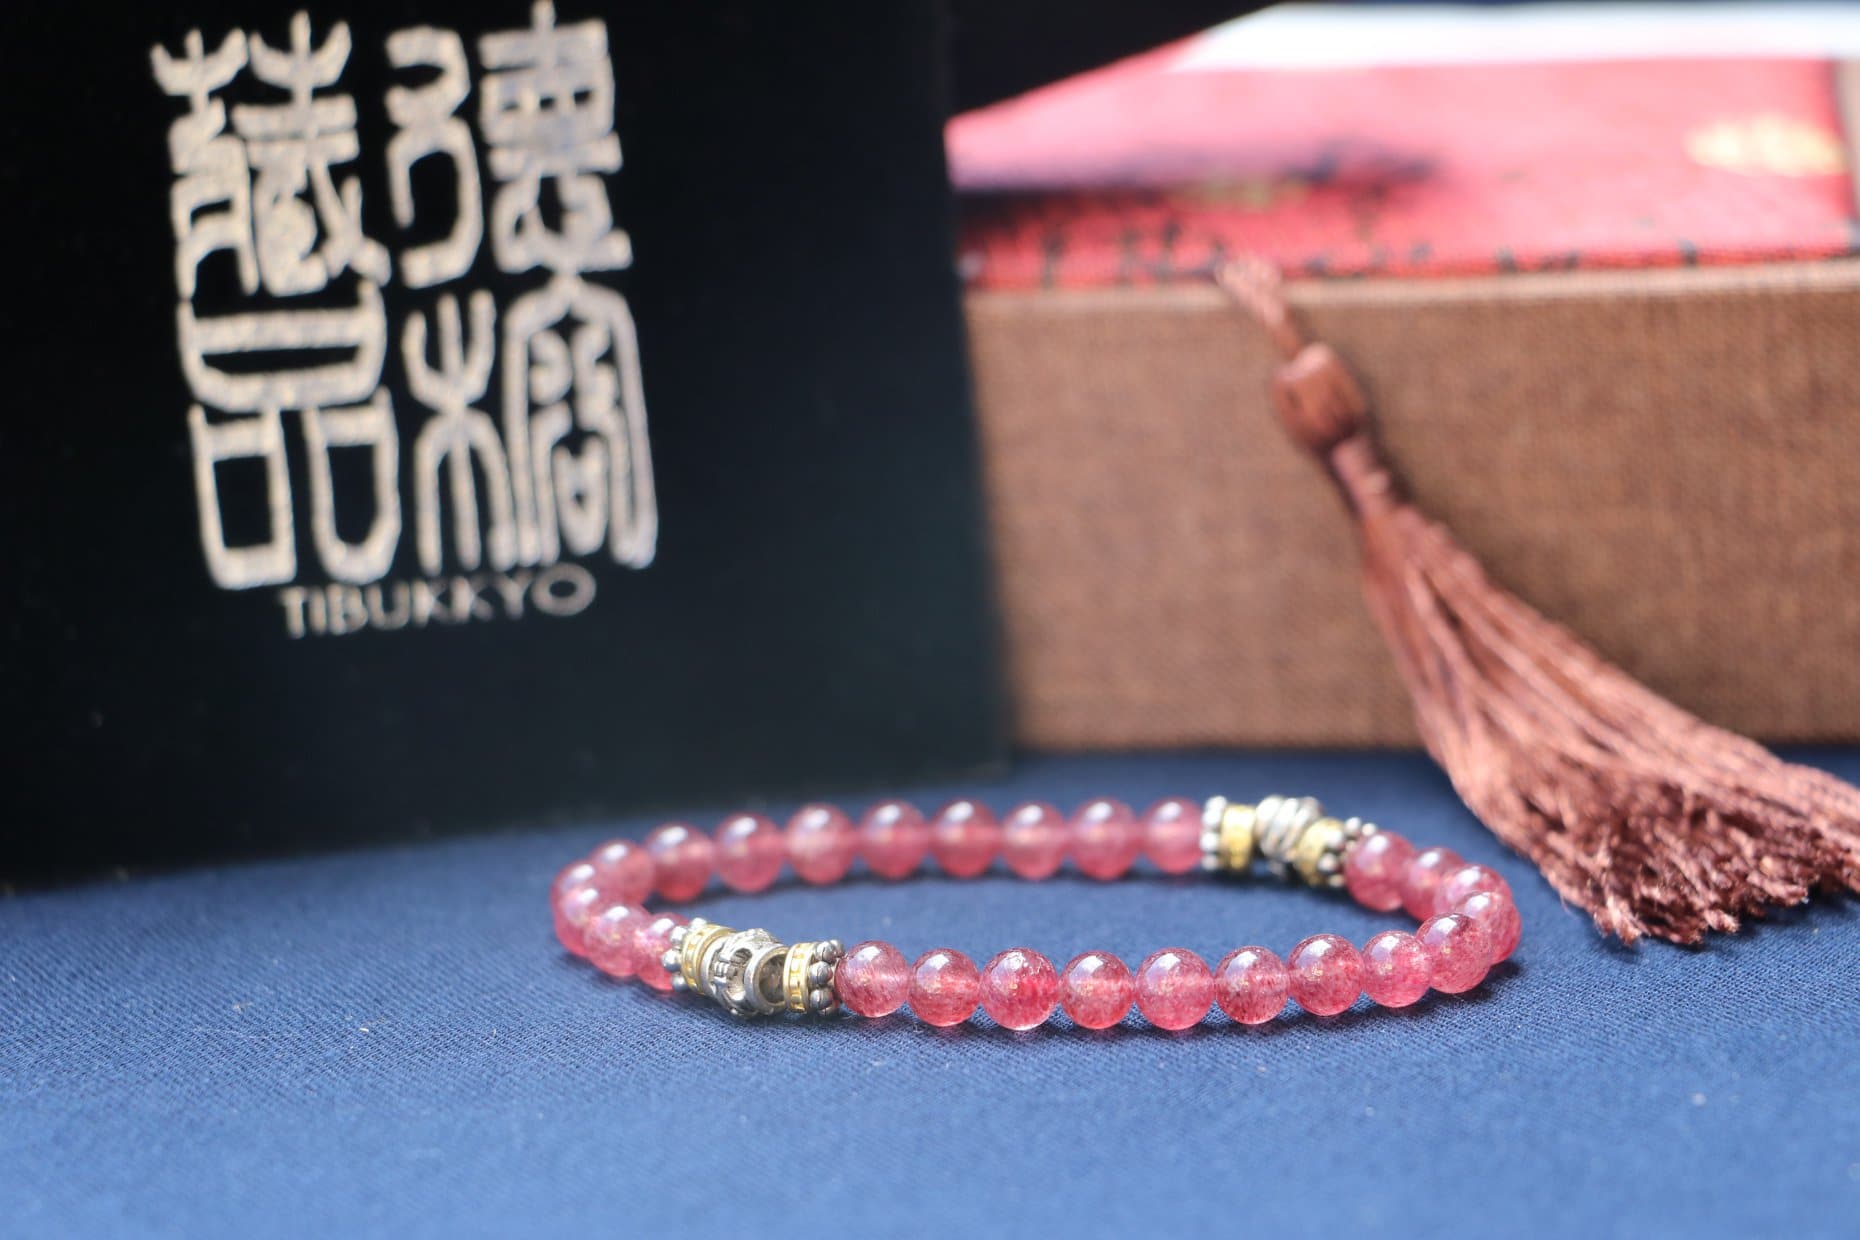 TIBUKKYO Taiwan Derong Collection｜Original undyed strawberry crystal 6mm round beads｜Tibetan silver brass spacer